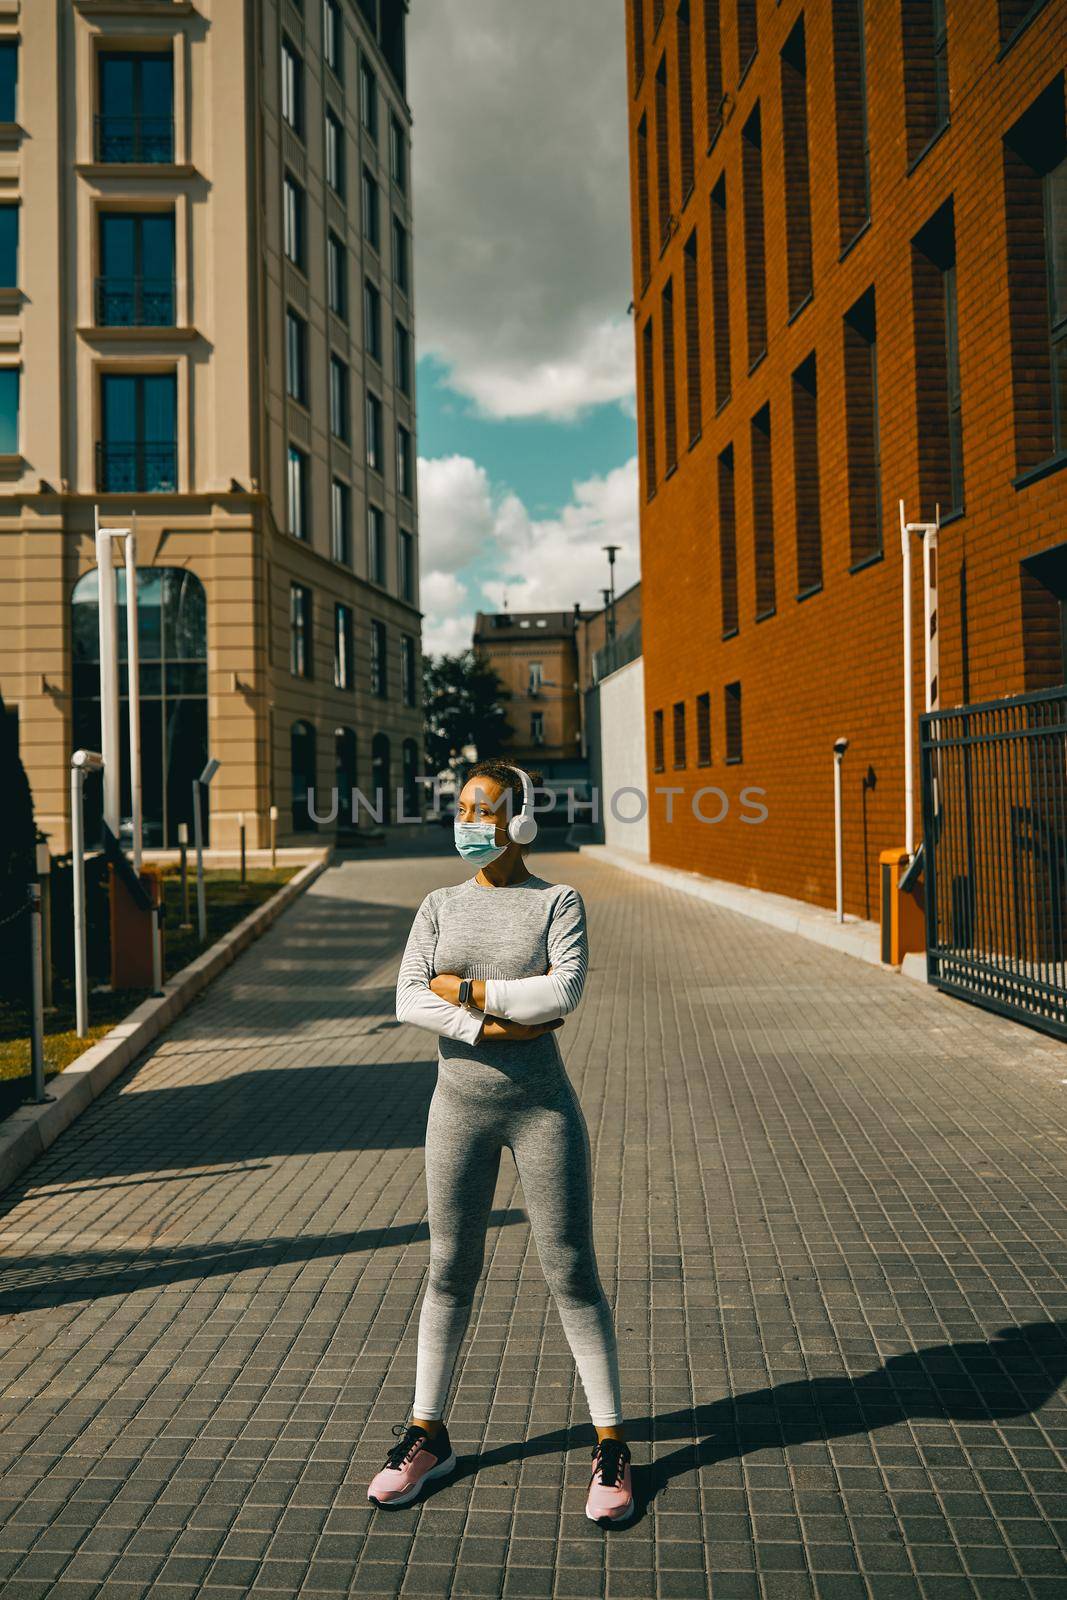 Sporty female runner standing on an urban street alone during Covid19 pandemic by Yaroslav_astakhov